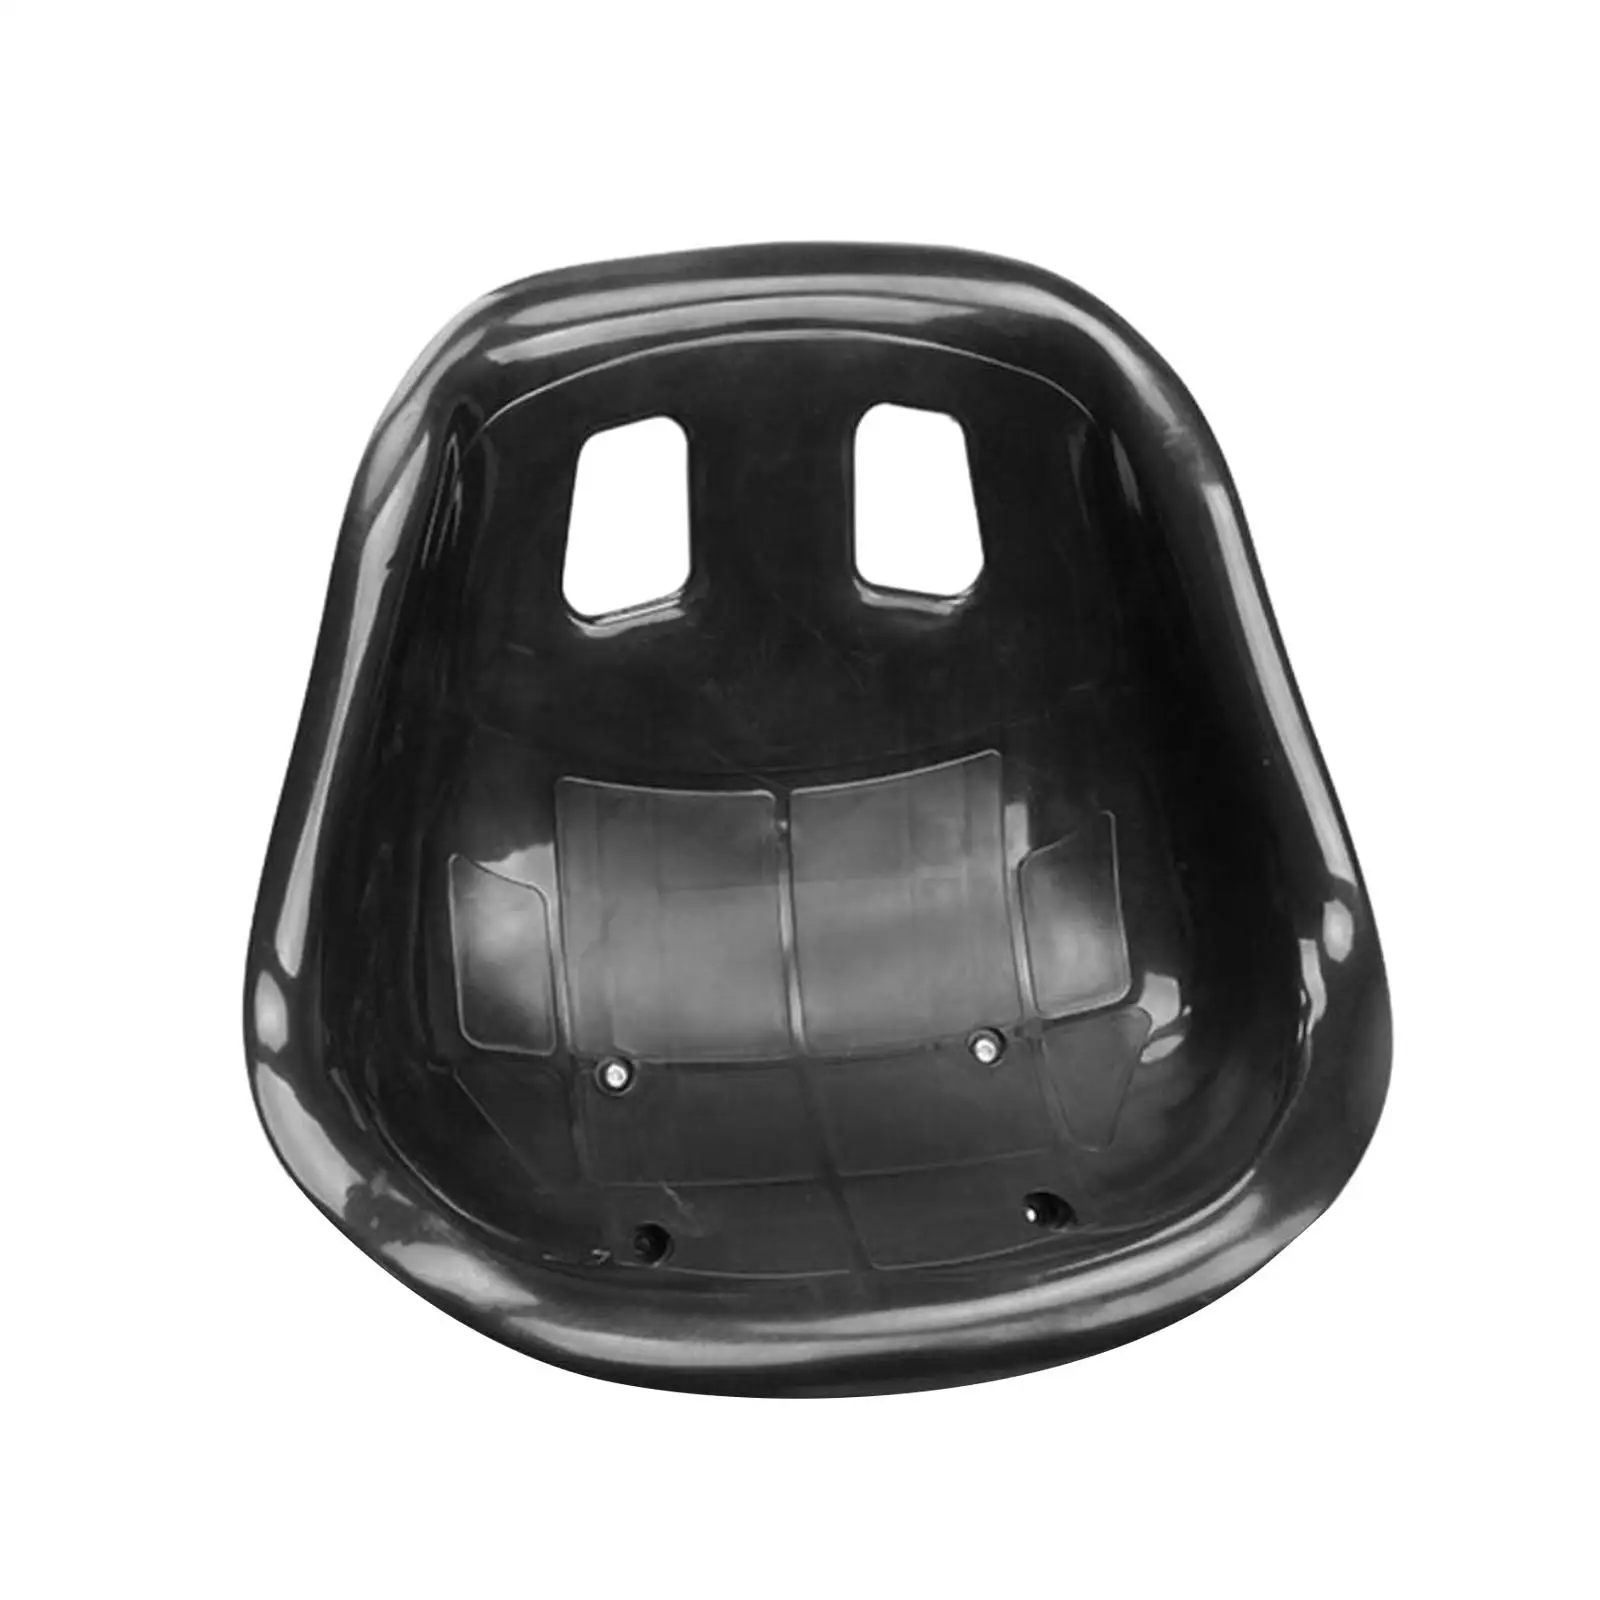 Go Kart Car Seat for Balance Karting Vhicles Black Drift Trikes Seat Saddle